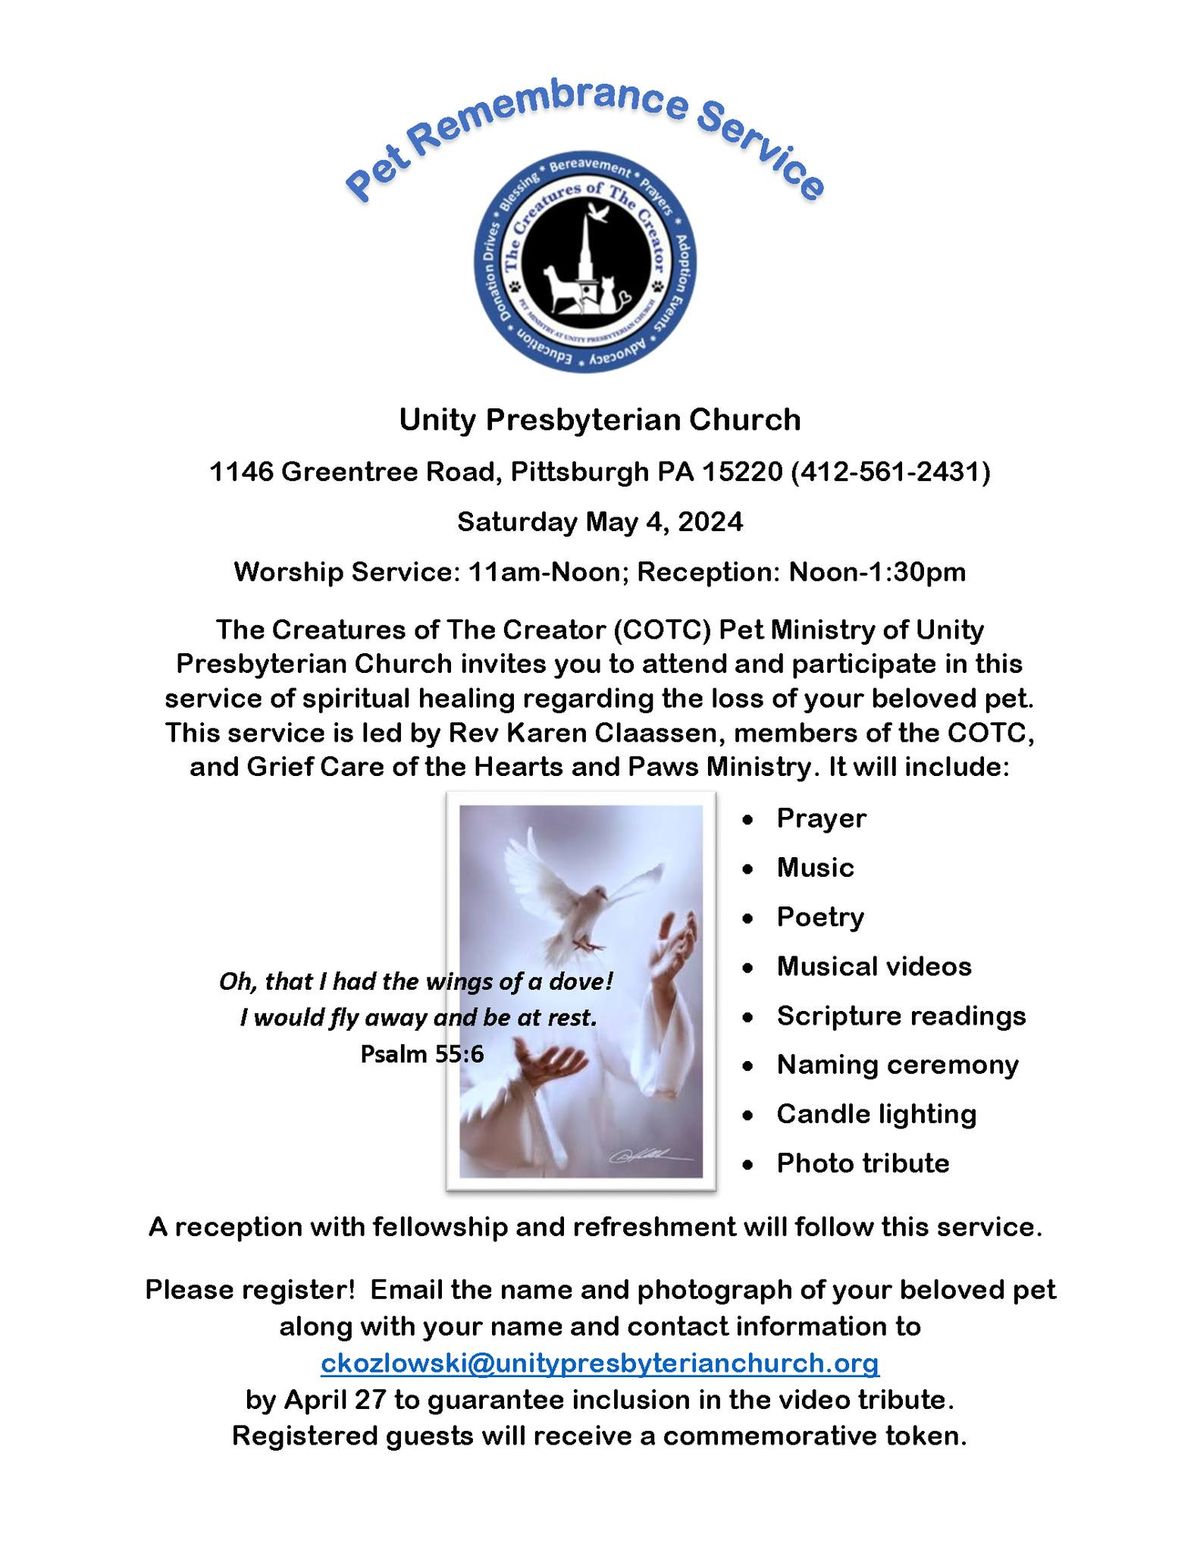 Pet Remembrance Service at Unity Presbyterian Church